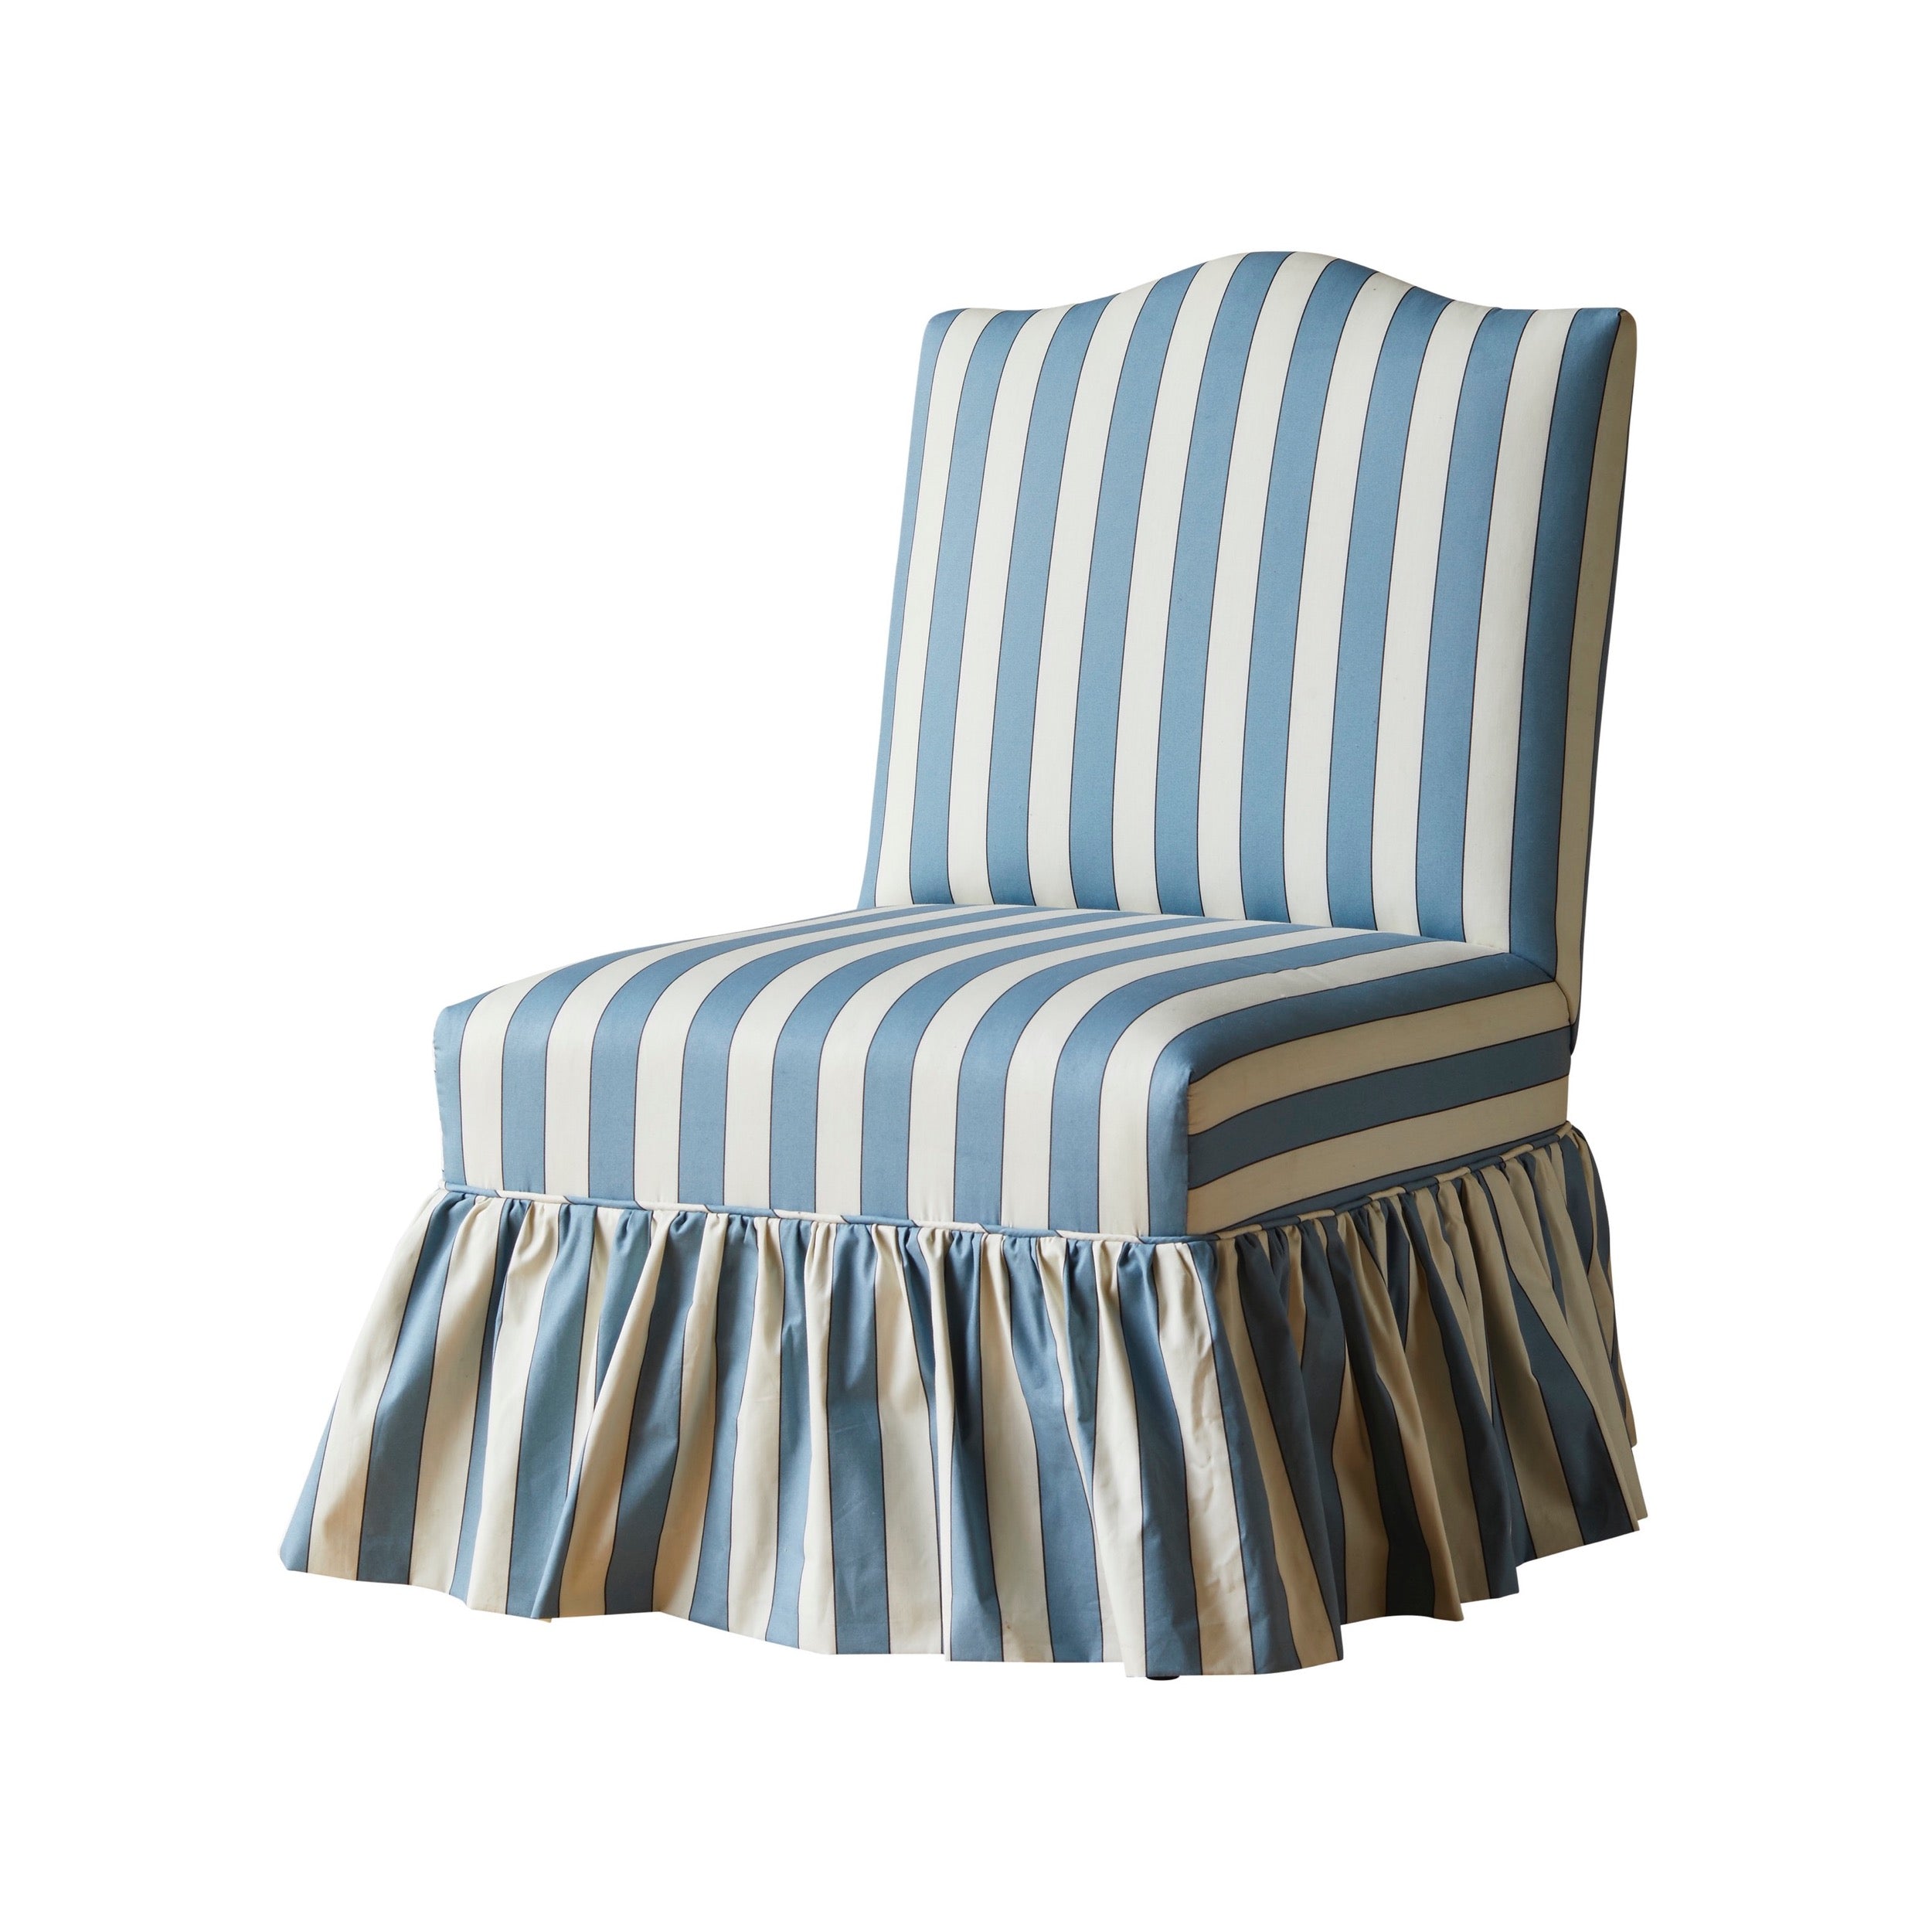 The Maud Plain Stripe Poplin Sea Blue with Gathered Skirt